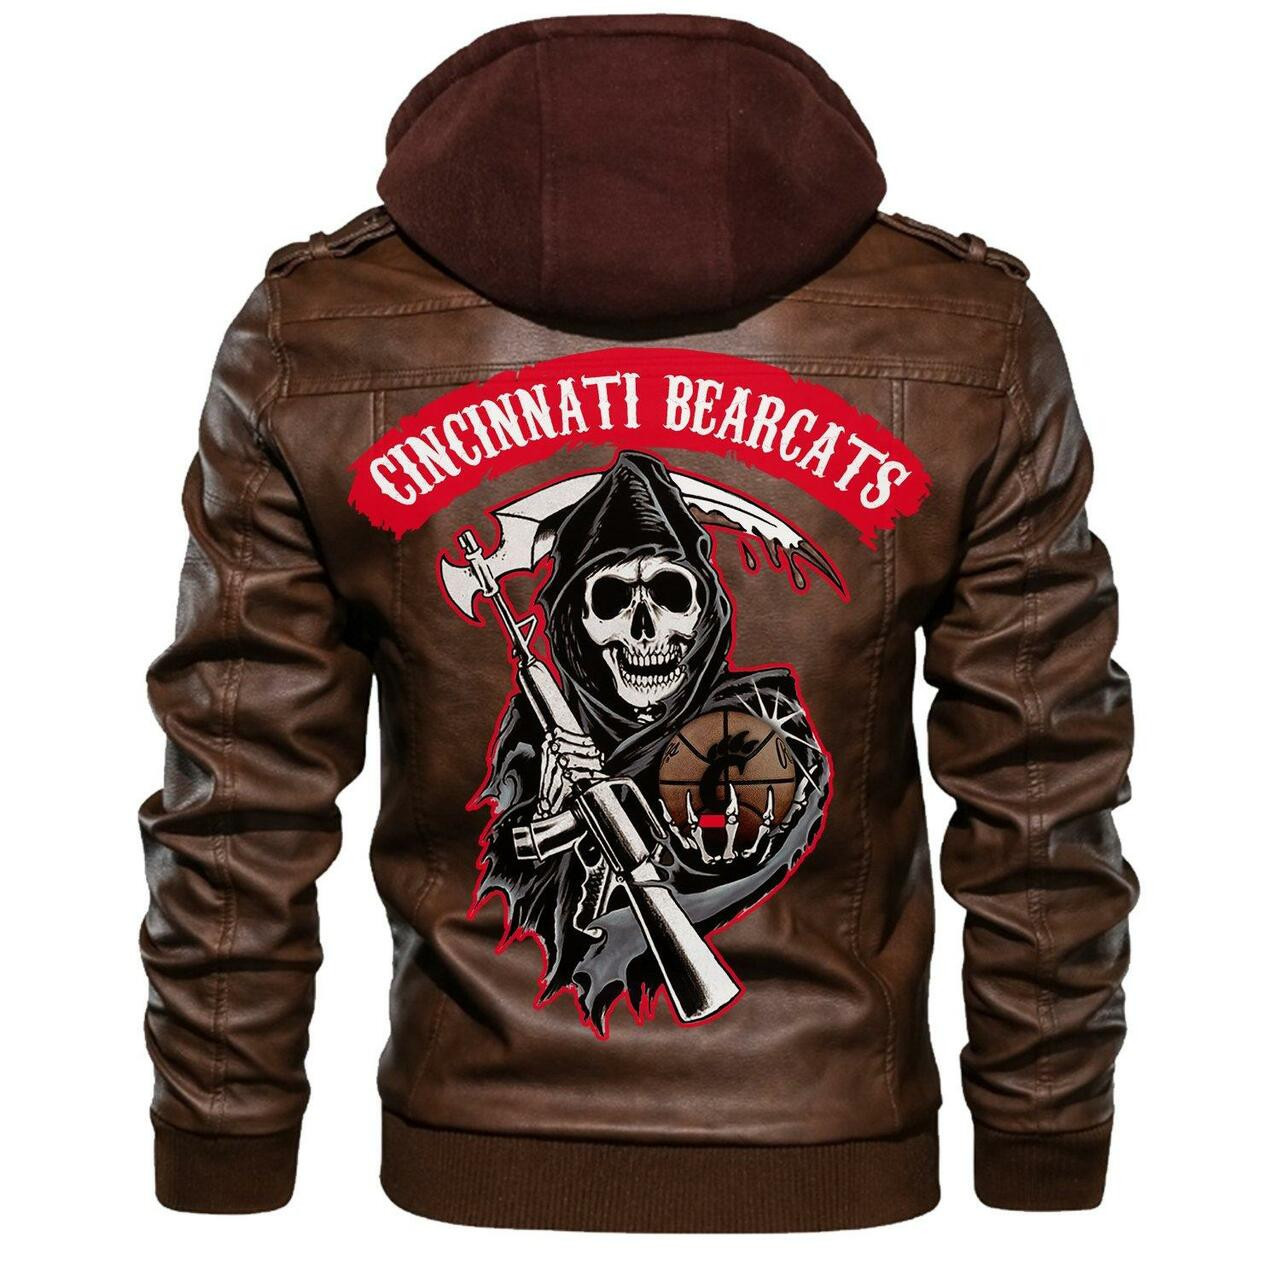 Top leather jacket Sells Best on Techcomshop 99